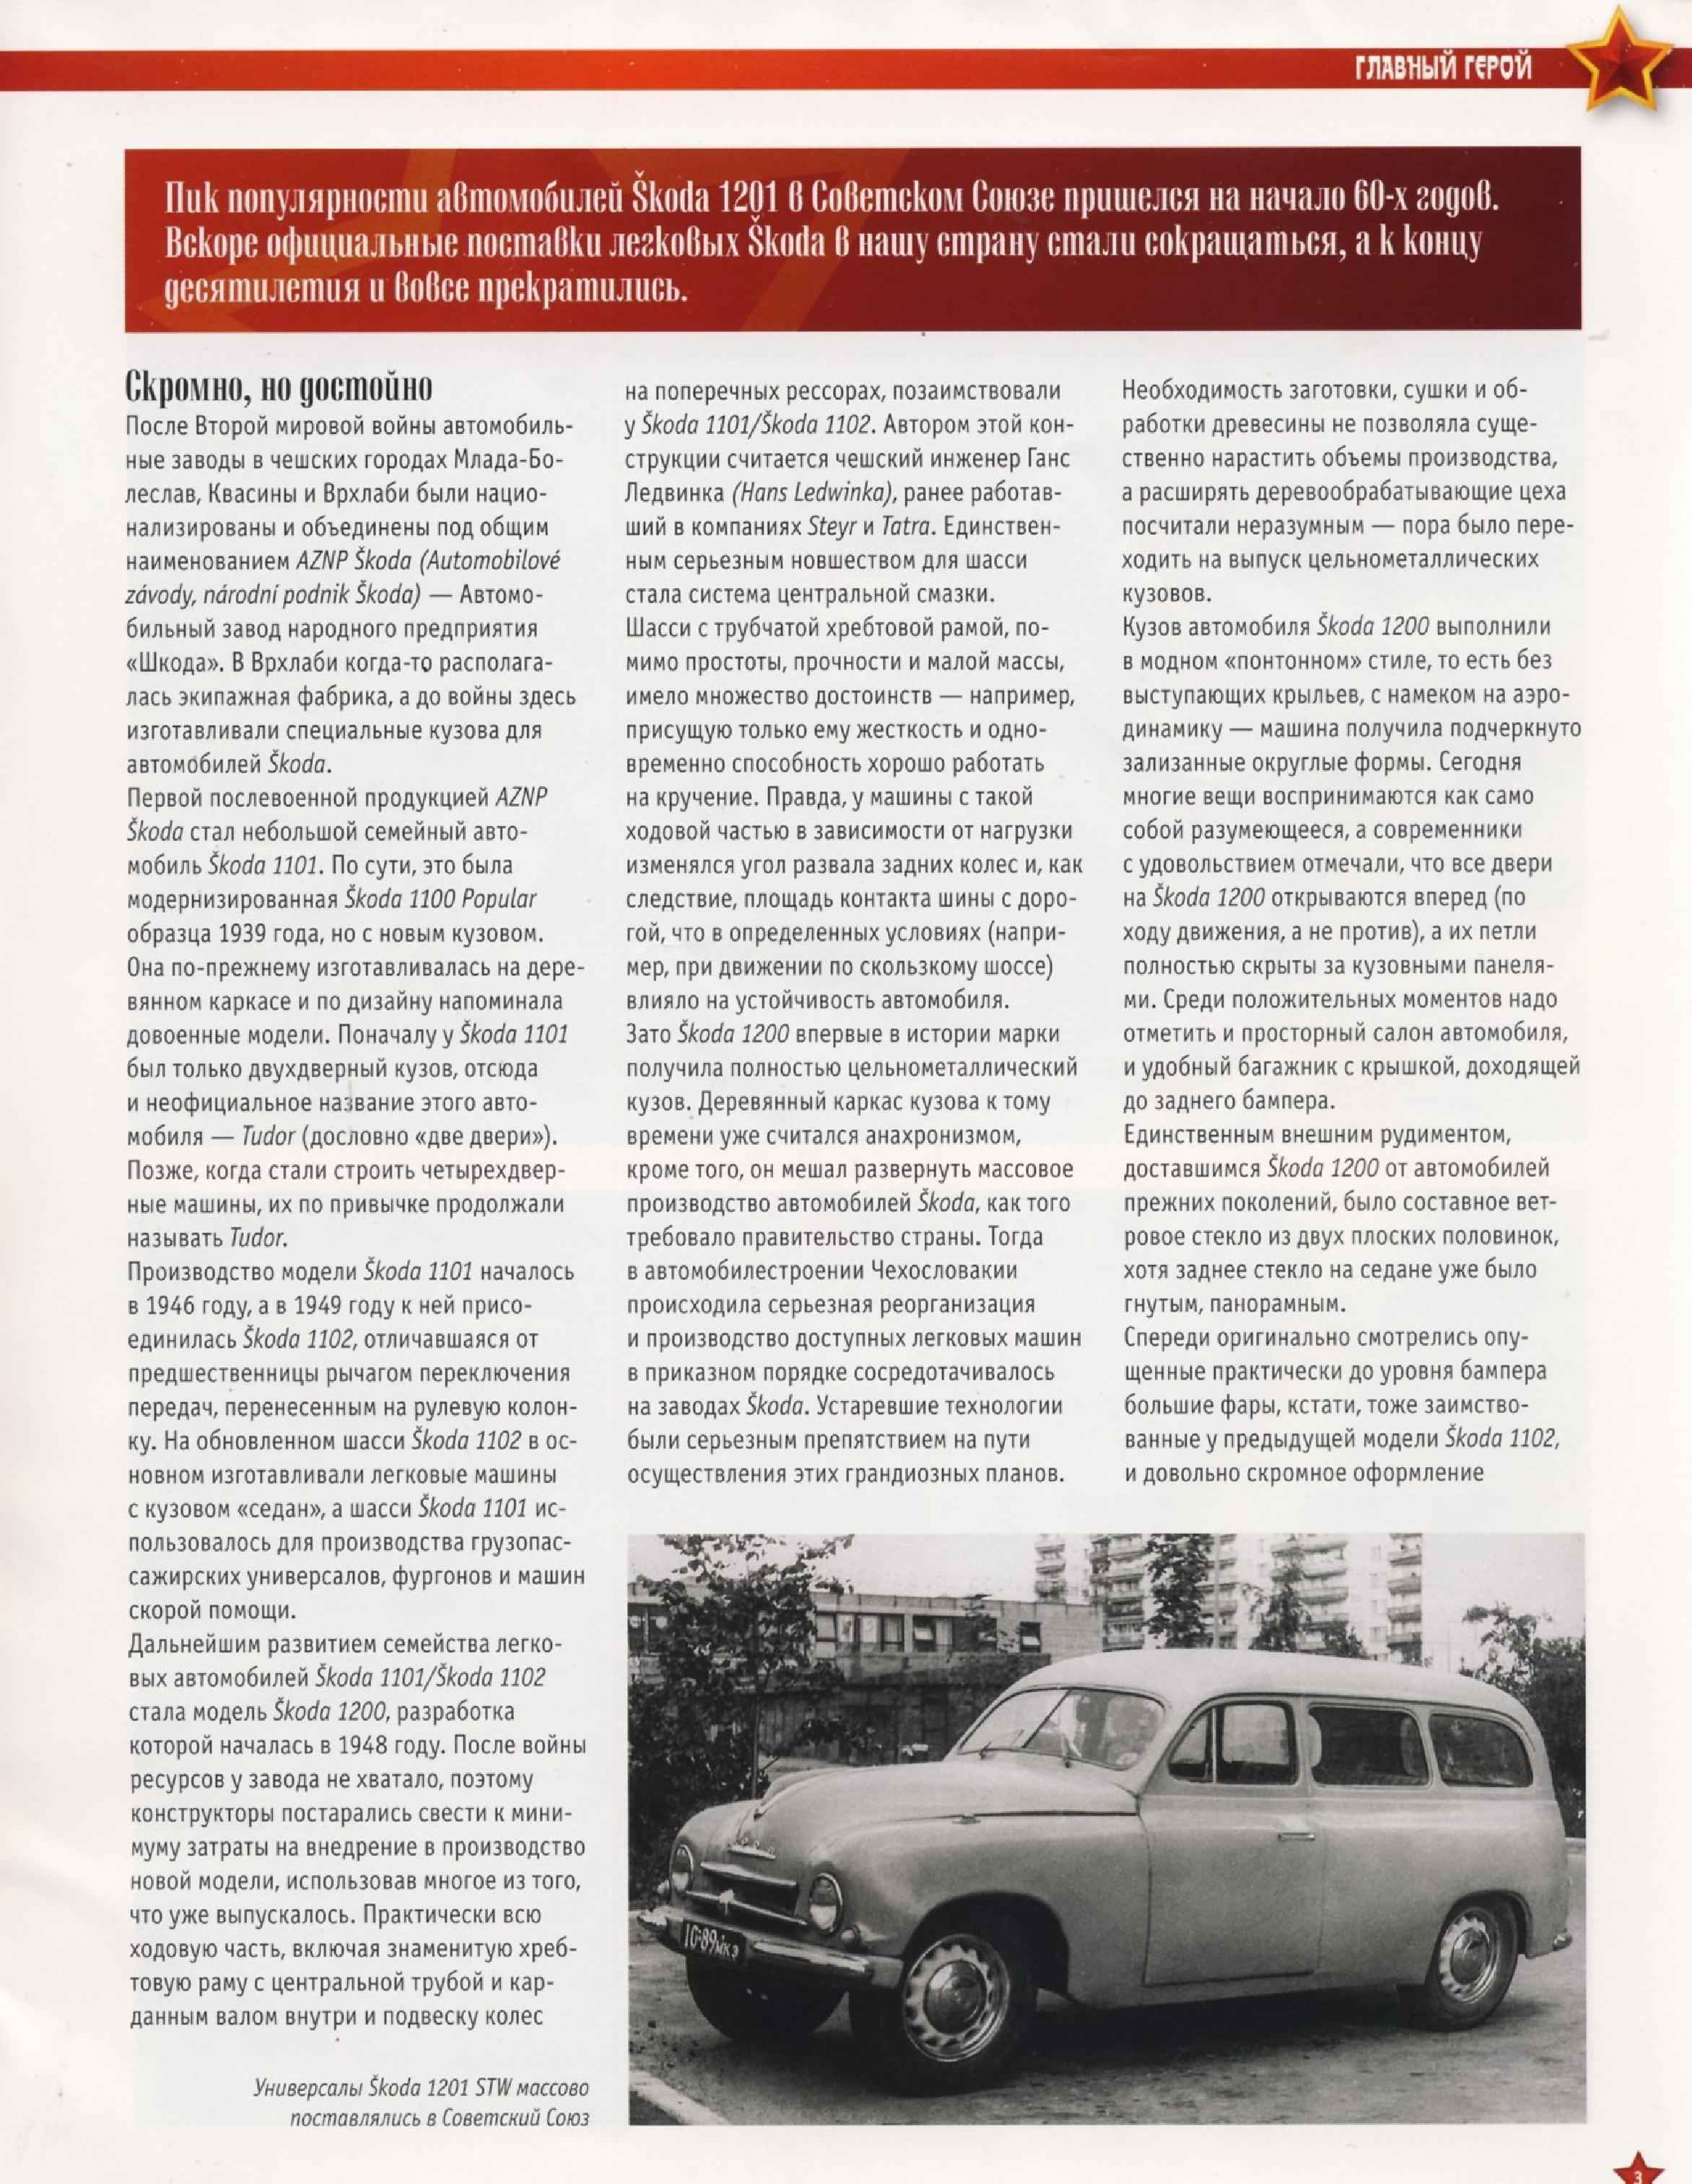 Automobile legend CCCP 192 SKODA 1201.pdf